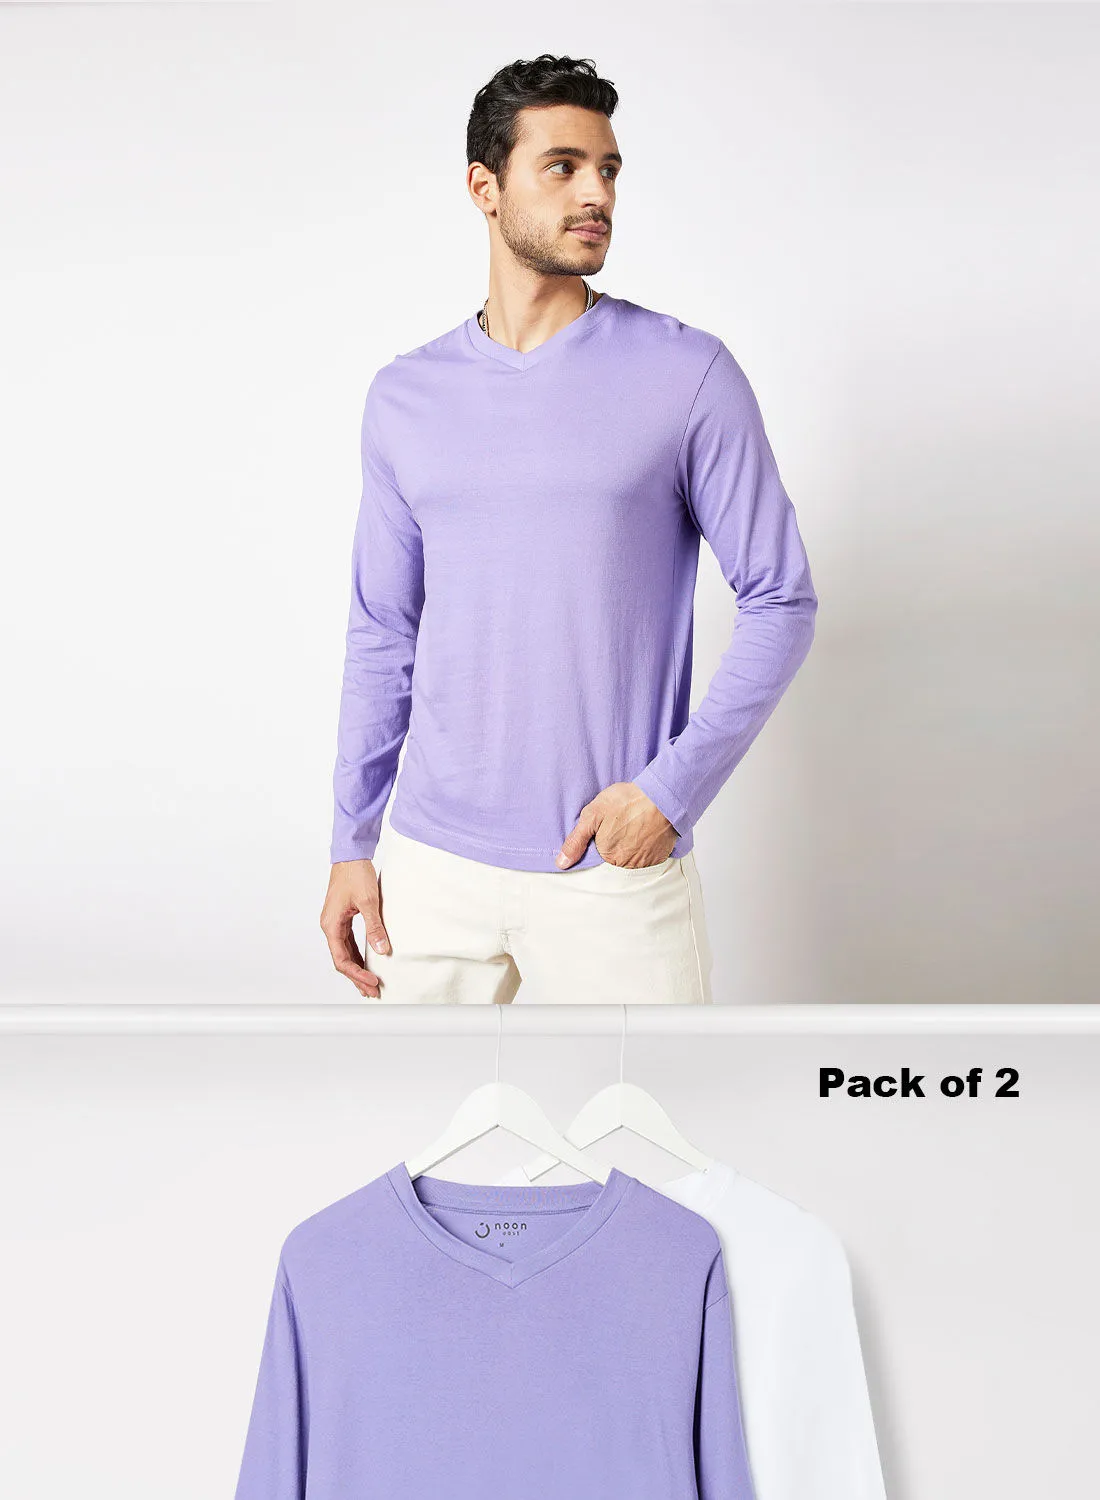 Noon East Pack Of 2 Men's Basic V-Neck Cotton Biowashed Fabric Comfort Fit Stylish Design T-Shirt Purple/White